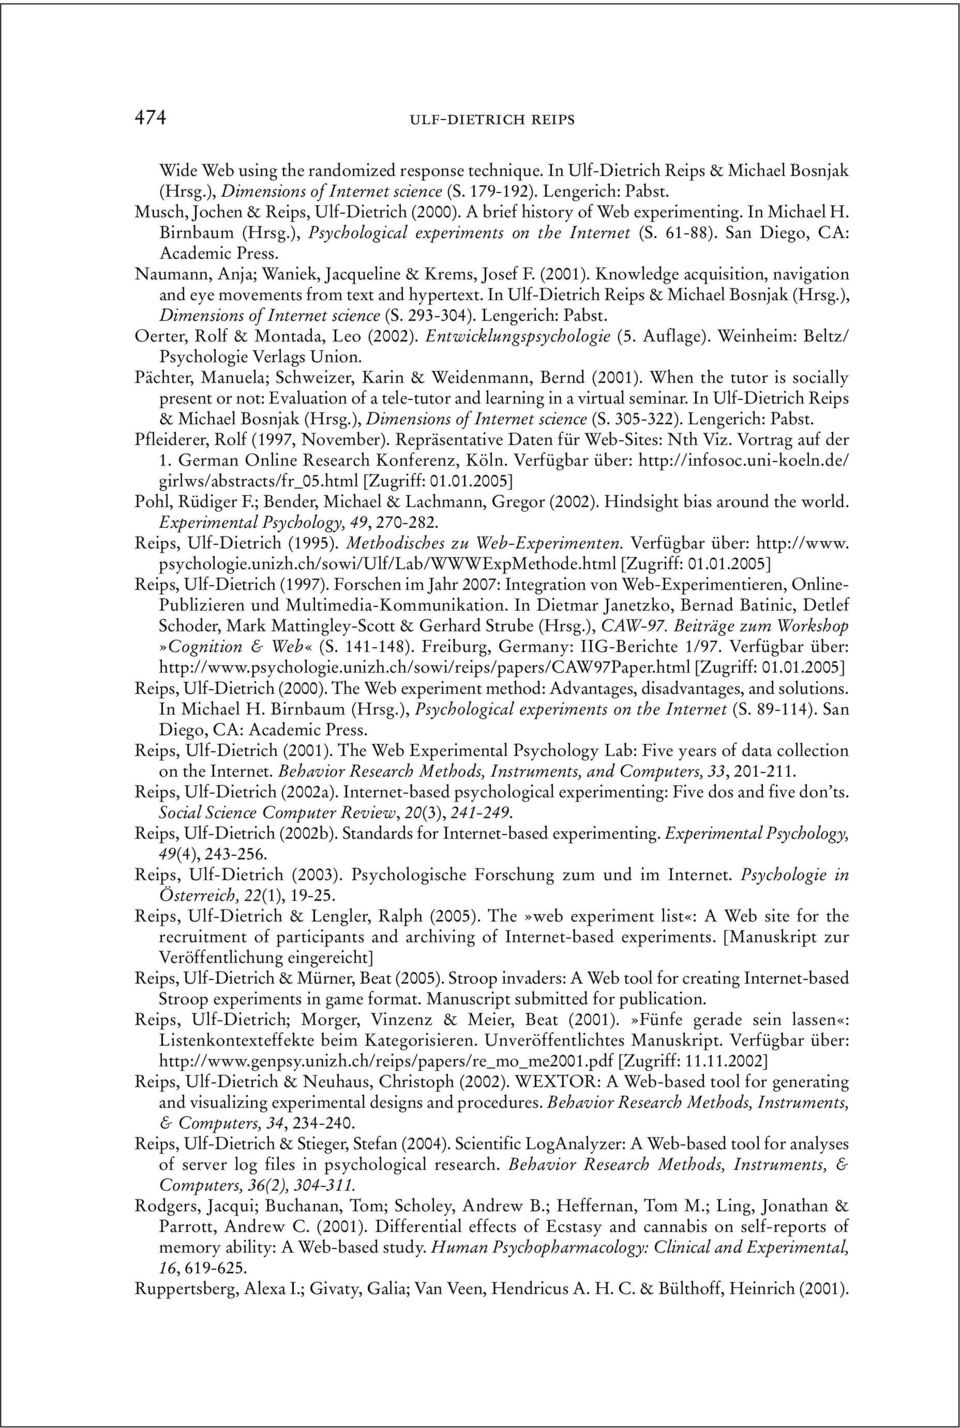 Naumann, Anja; Waniek, Jacqueline & Krems, Josef F. (2001). Knowledge acquisition, navigation and eye movements from text and hypertext. In Ulf-Dietrich Reips & Michael Bosnjak (Hrsg.